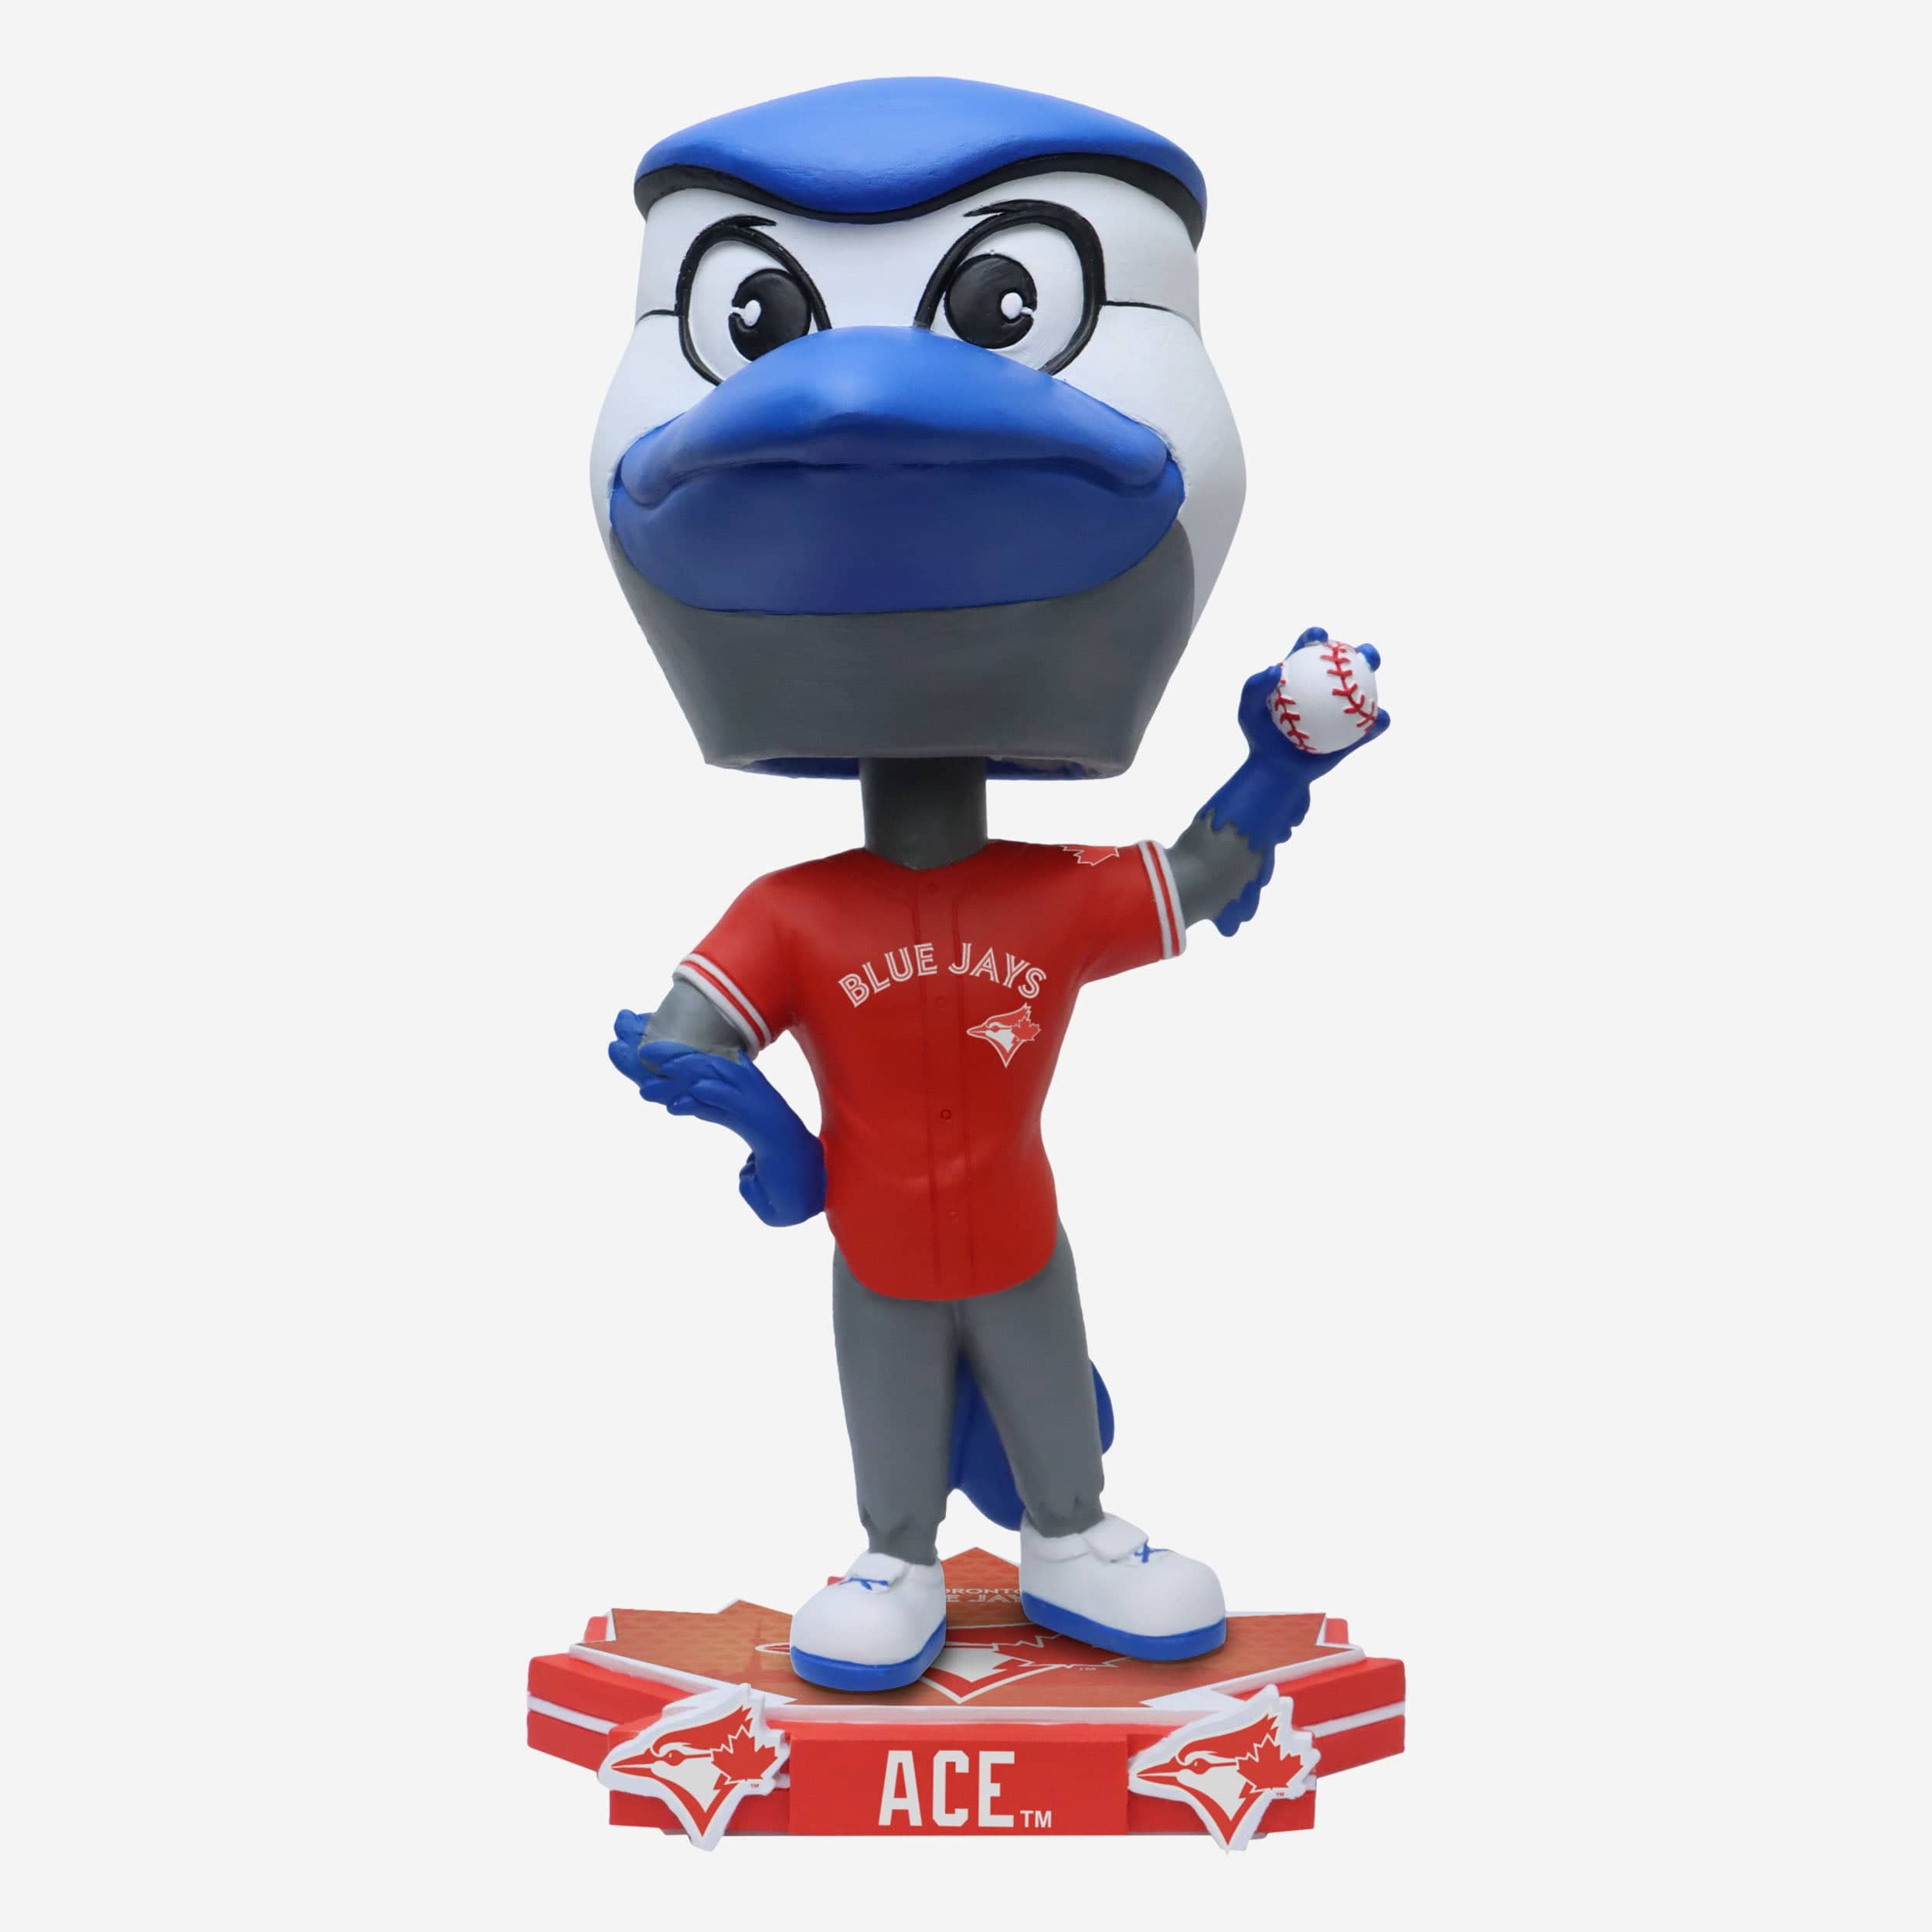 Ace Toronto Blue Jays Opening Day Mascot Bobblehead